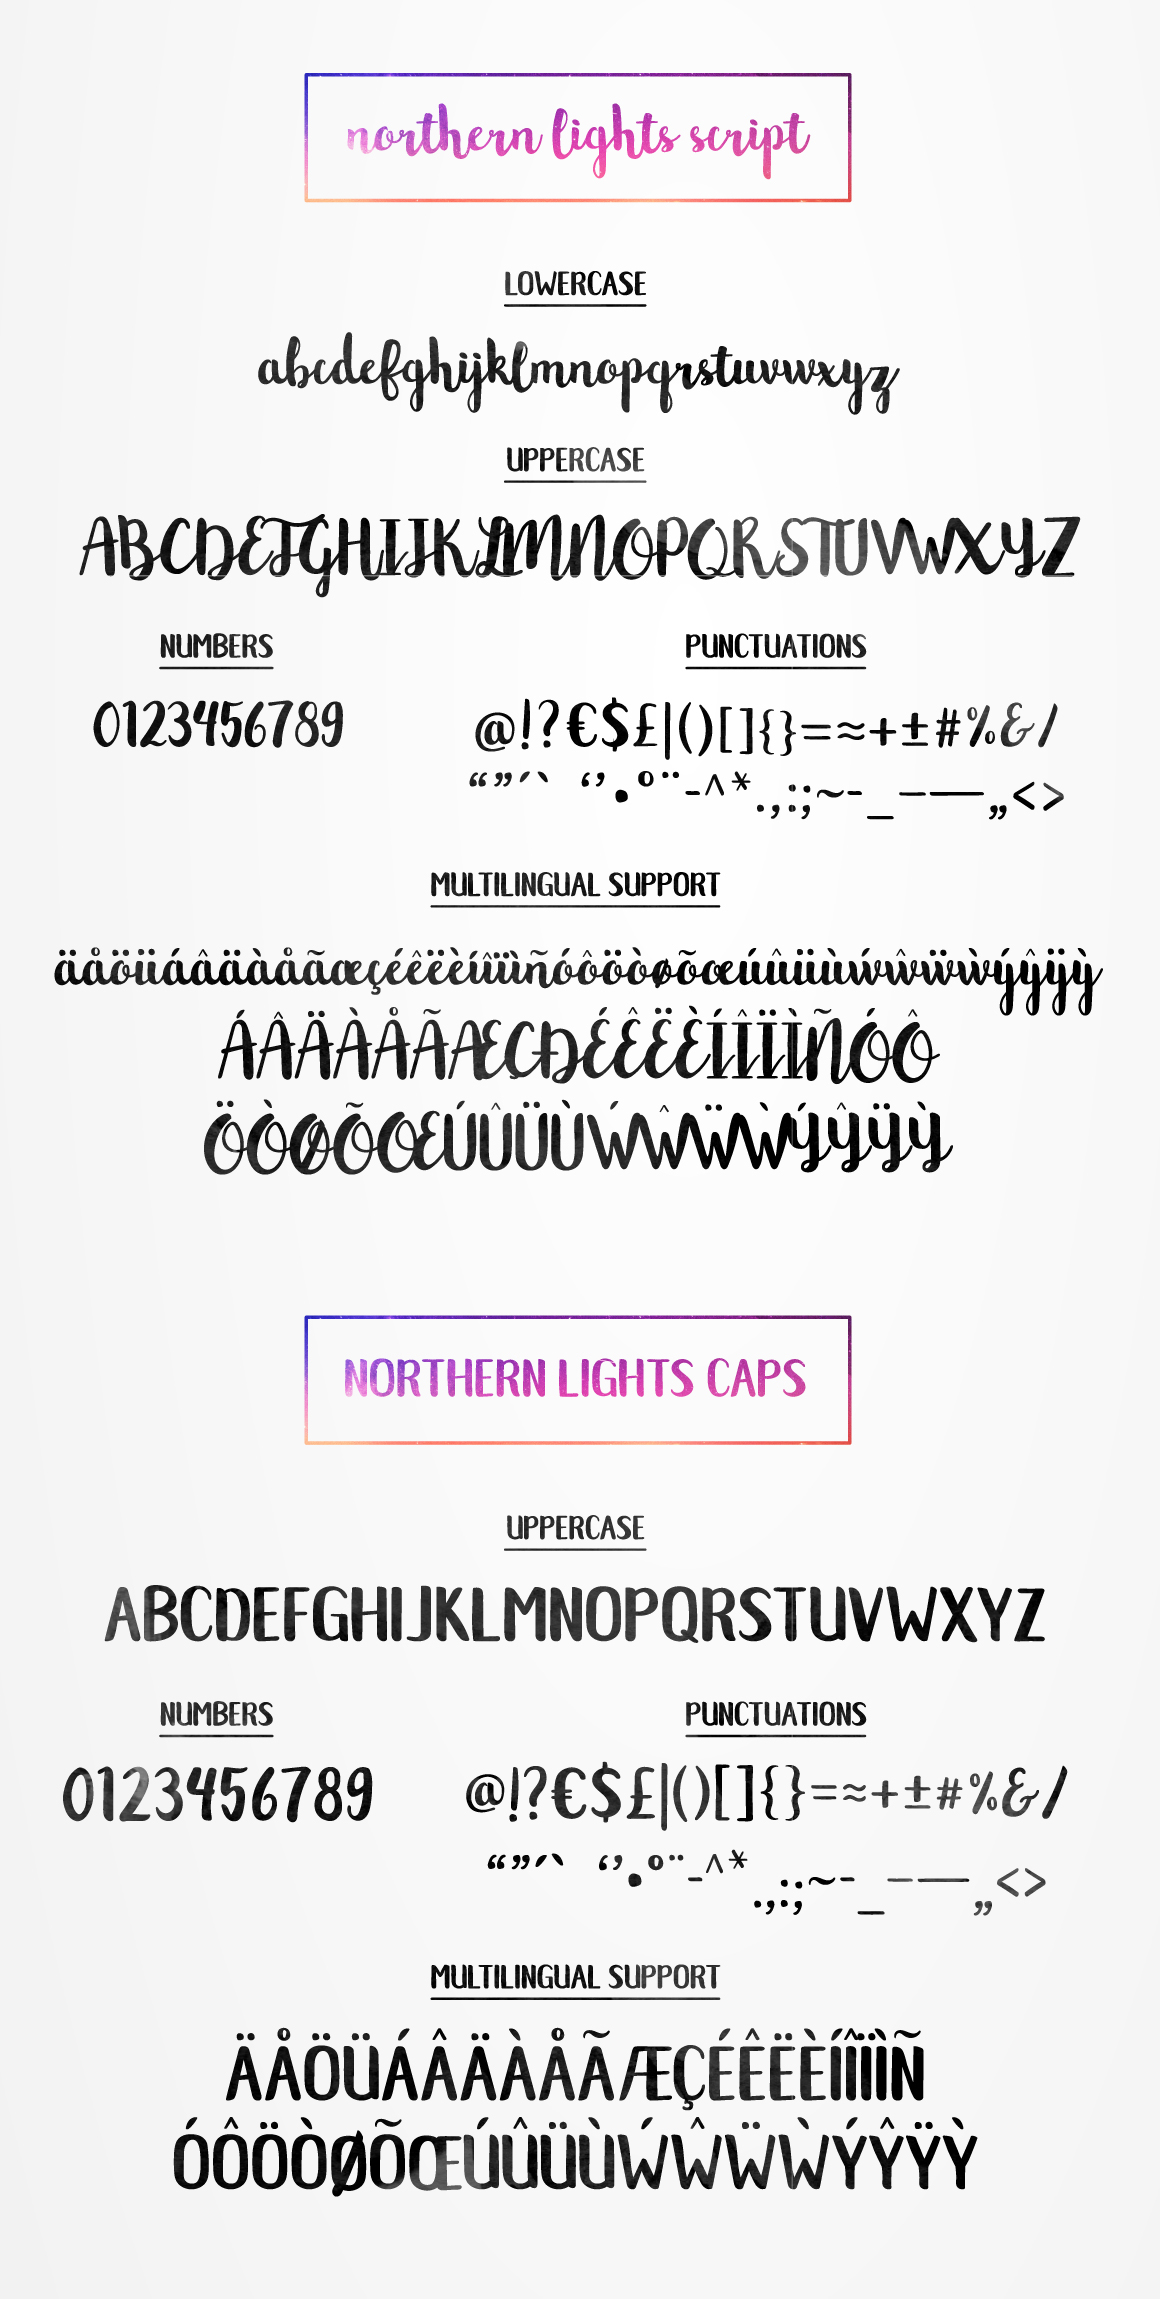 free font fonts freebie handmade Script brush download Typeface inspiration